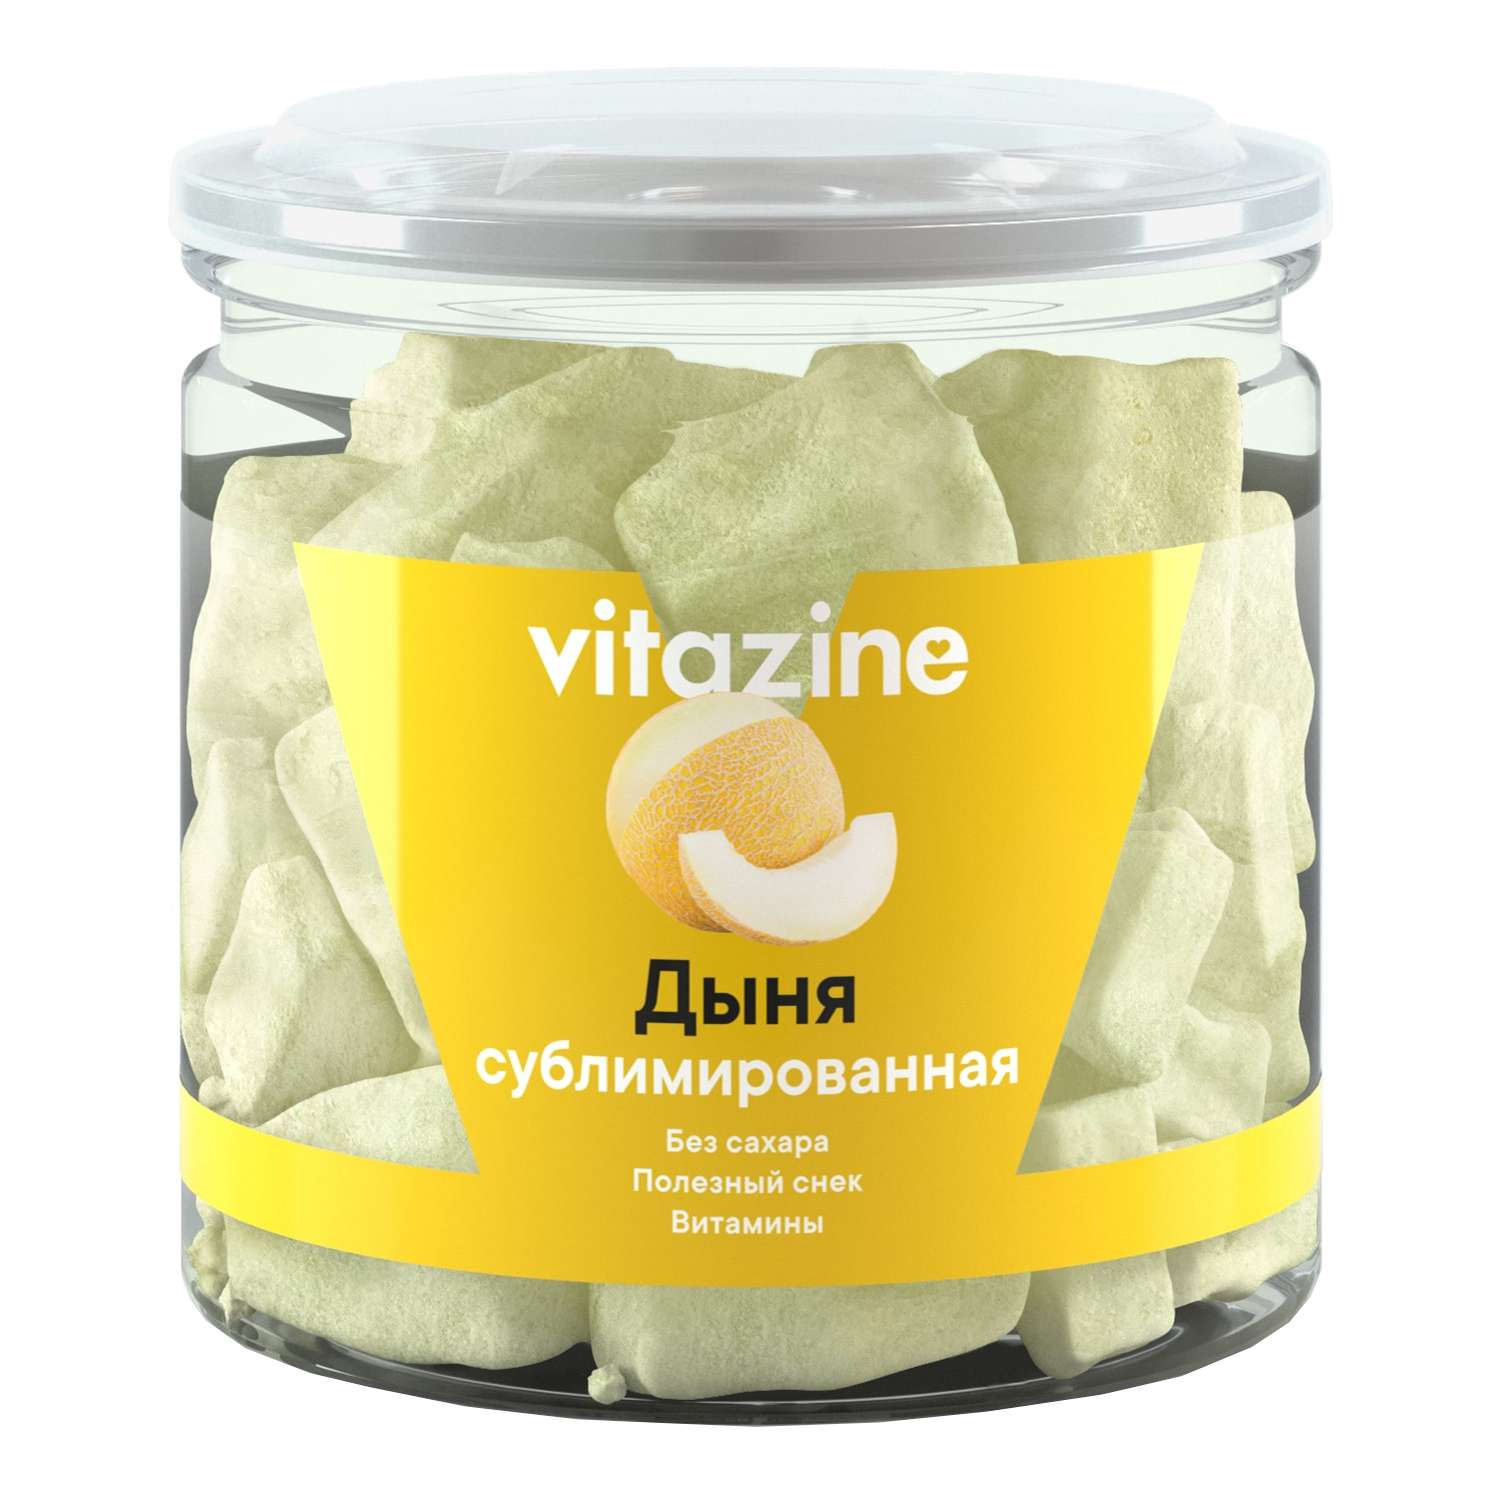 Дыня Vitazine сублимированная 27г - фото 1